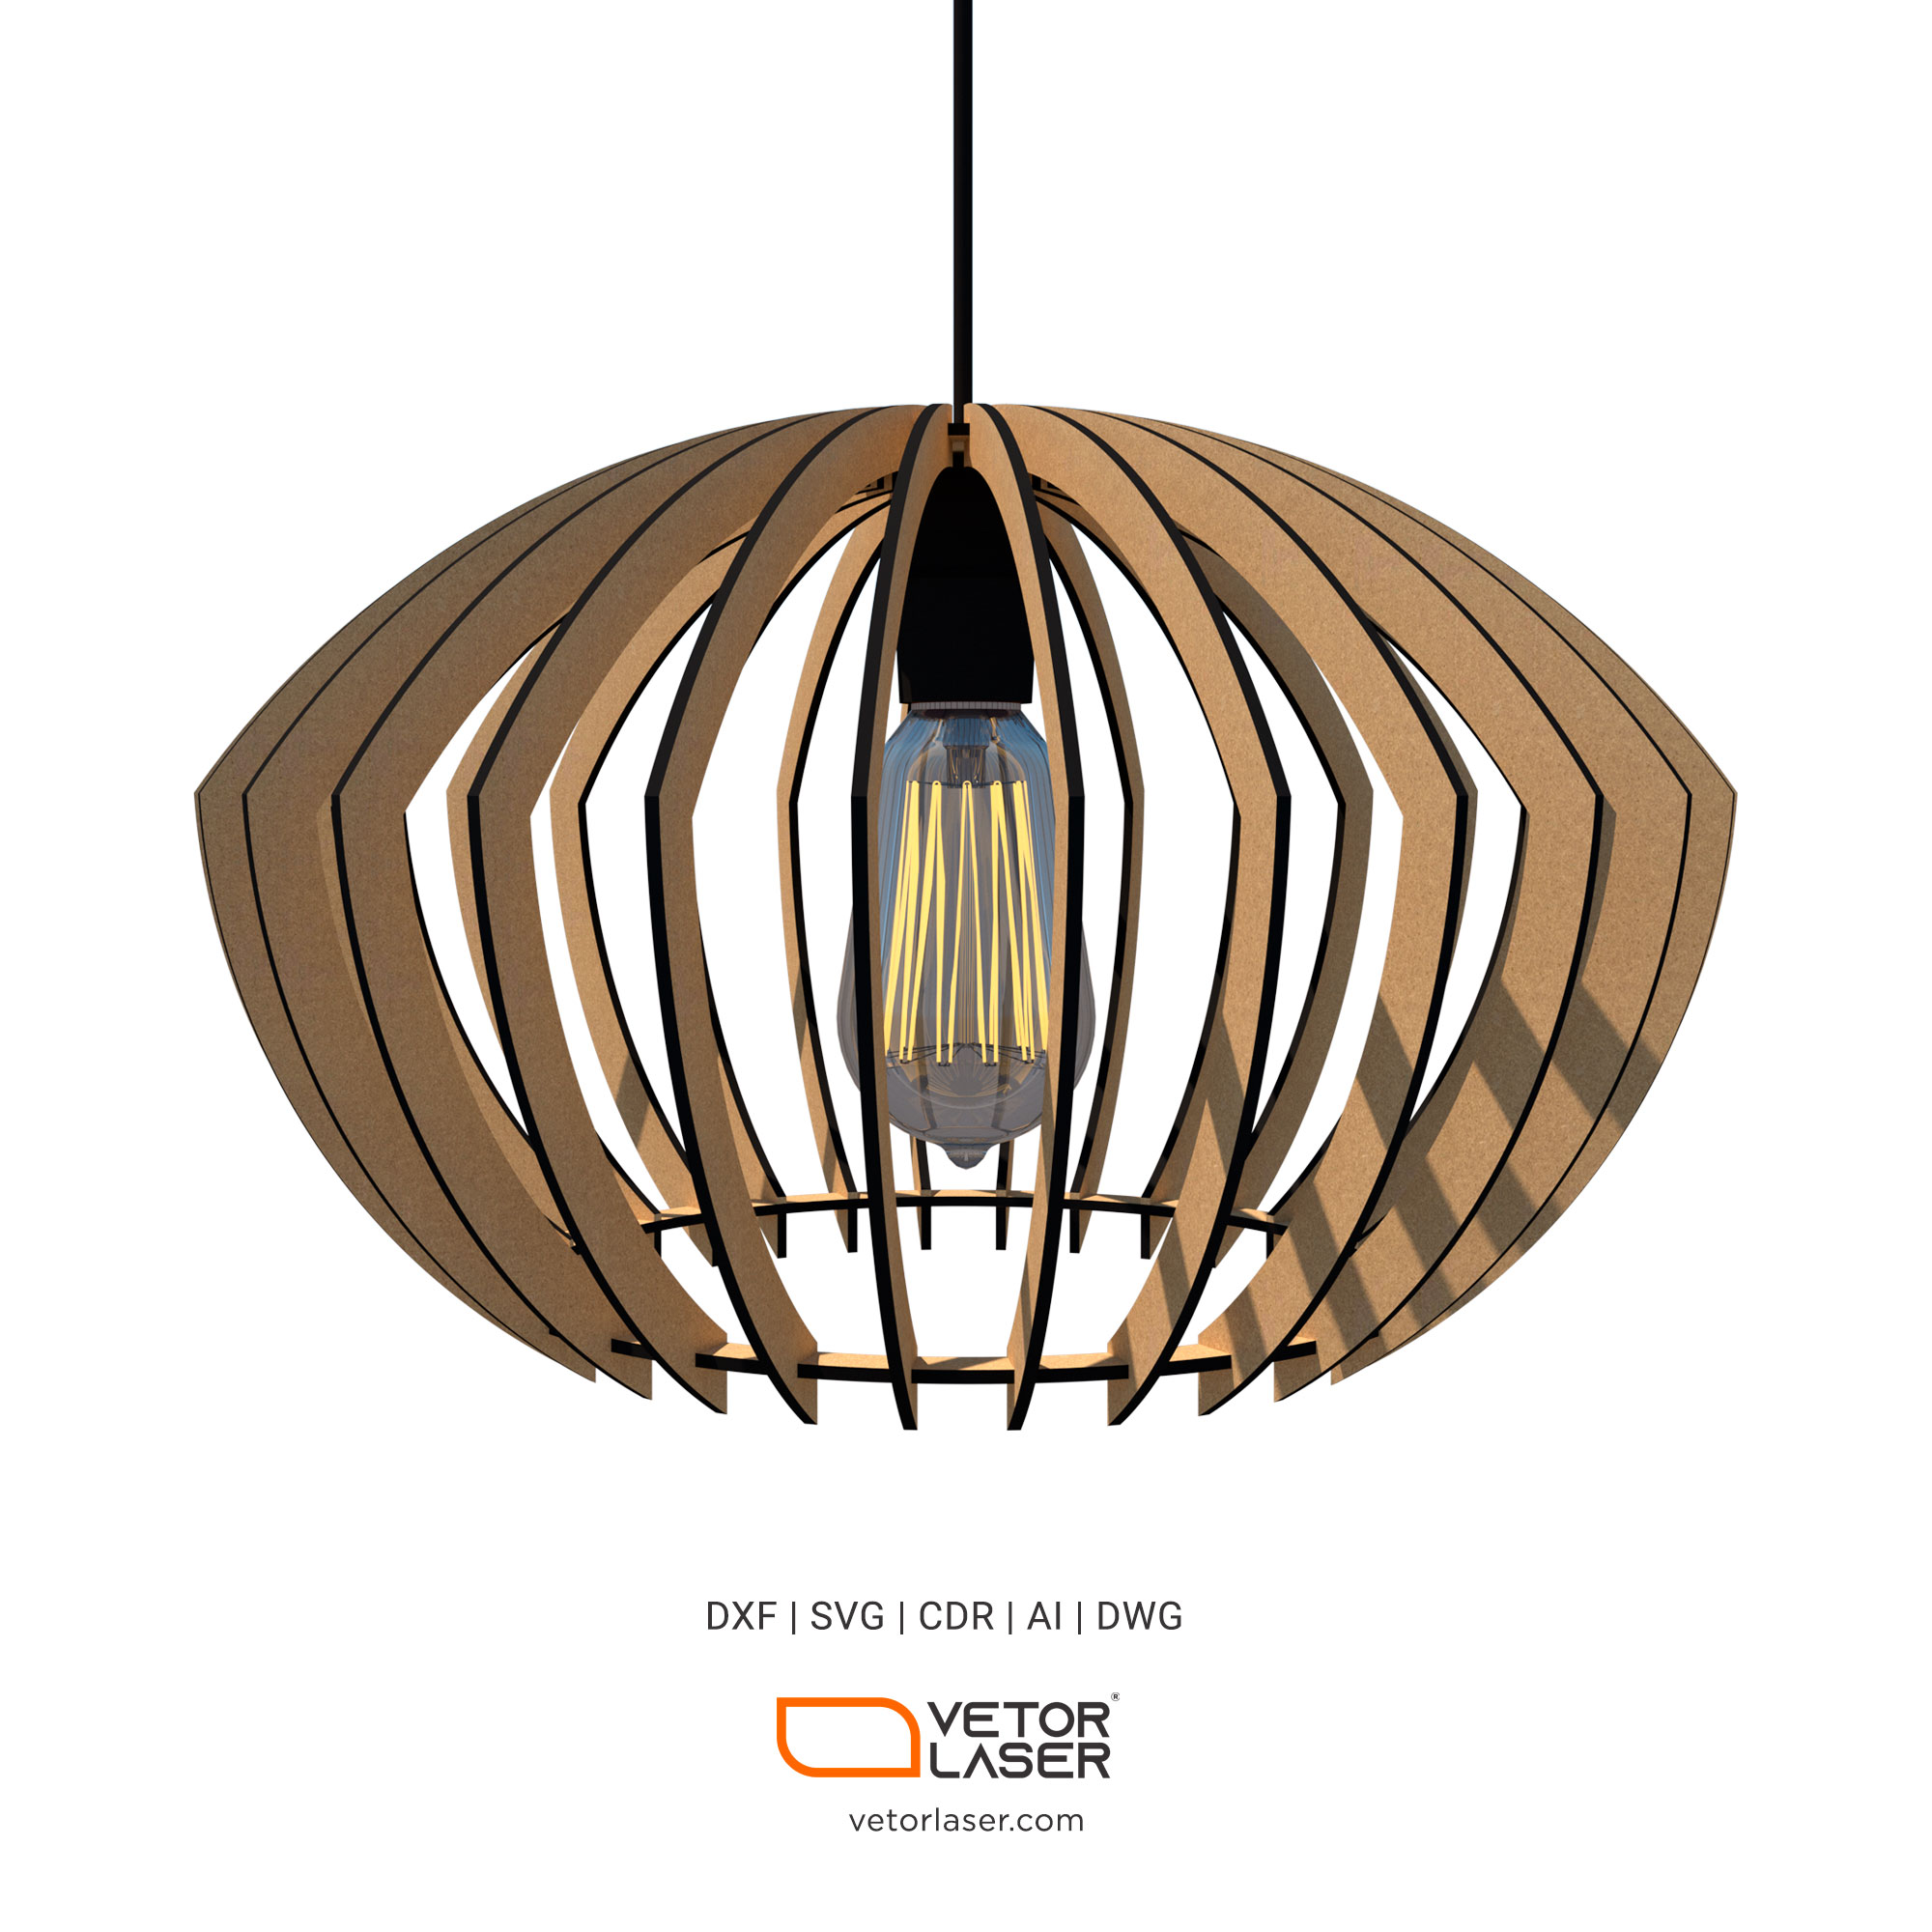 20 Wooden Lamp Design Digital File for Laser Cut and CNC 